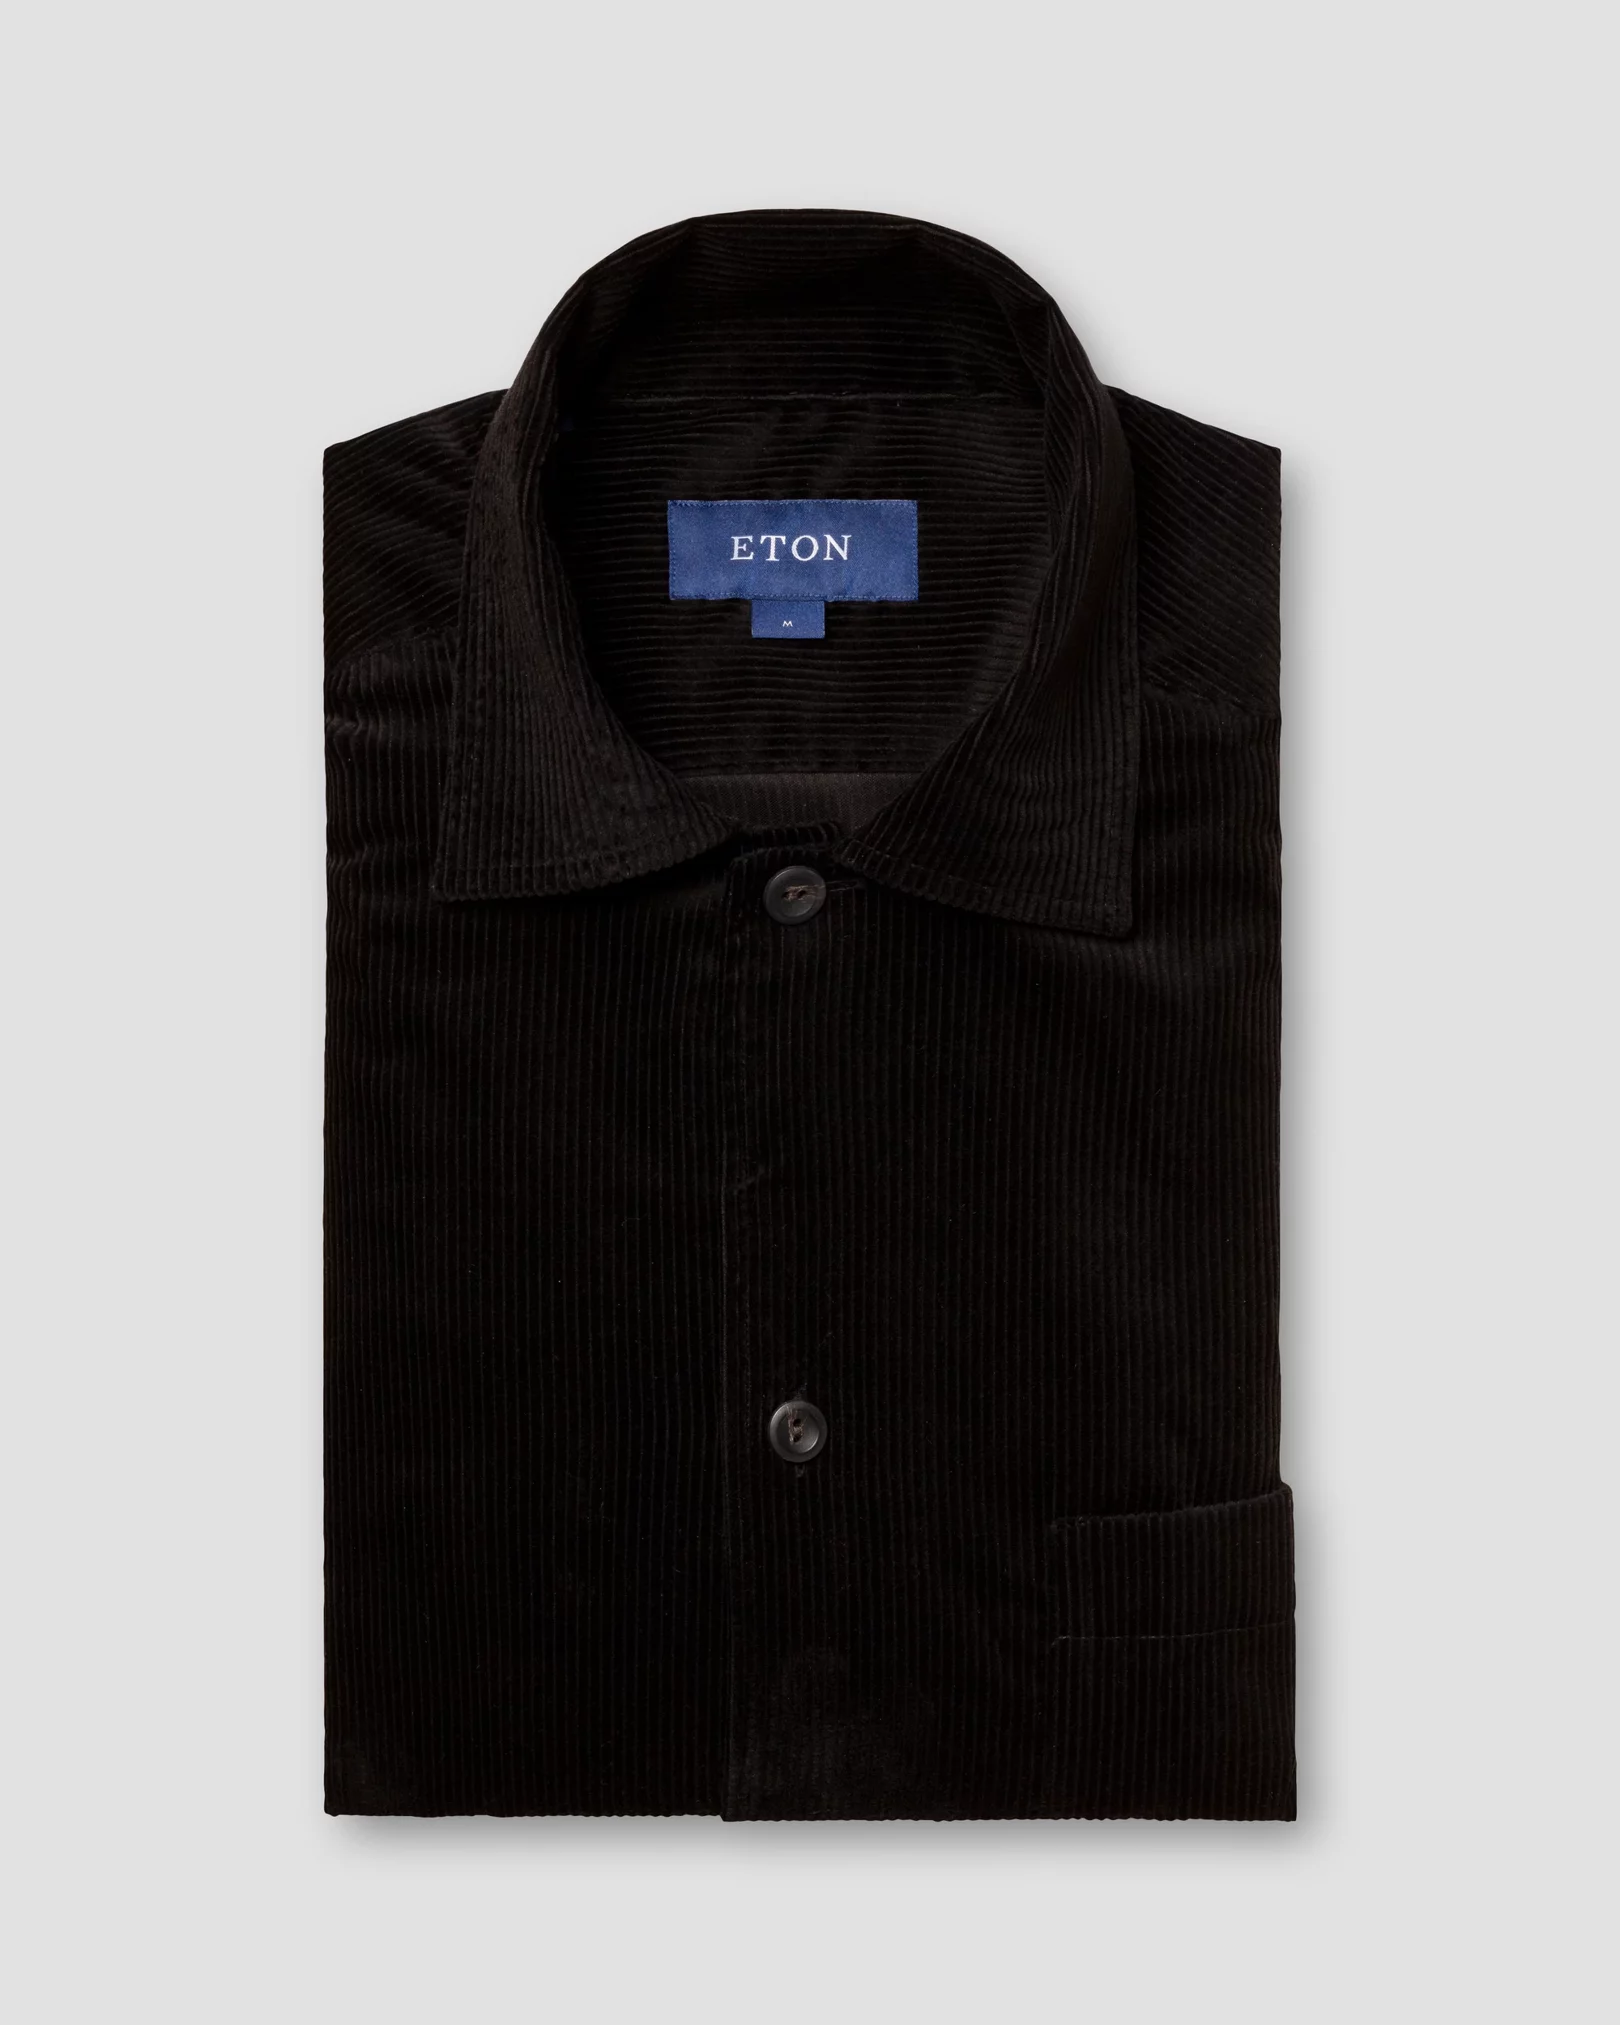 Eton - black corduroy overshirt turn down straight sleeve end regular